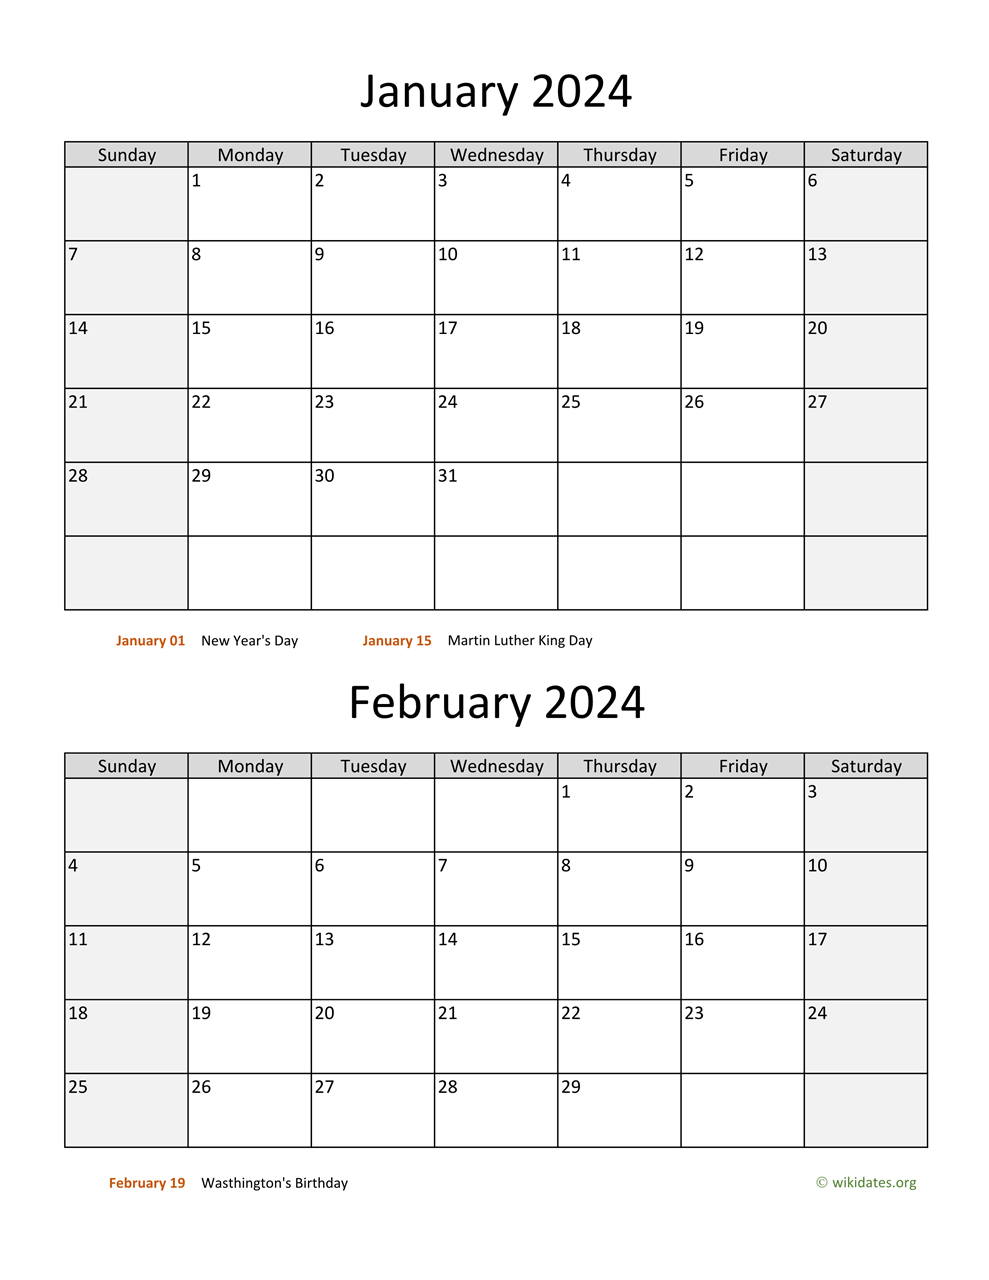 January And February 2024 Calendar | Wikidates for Printable Jan Feb 2024 Calendar